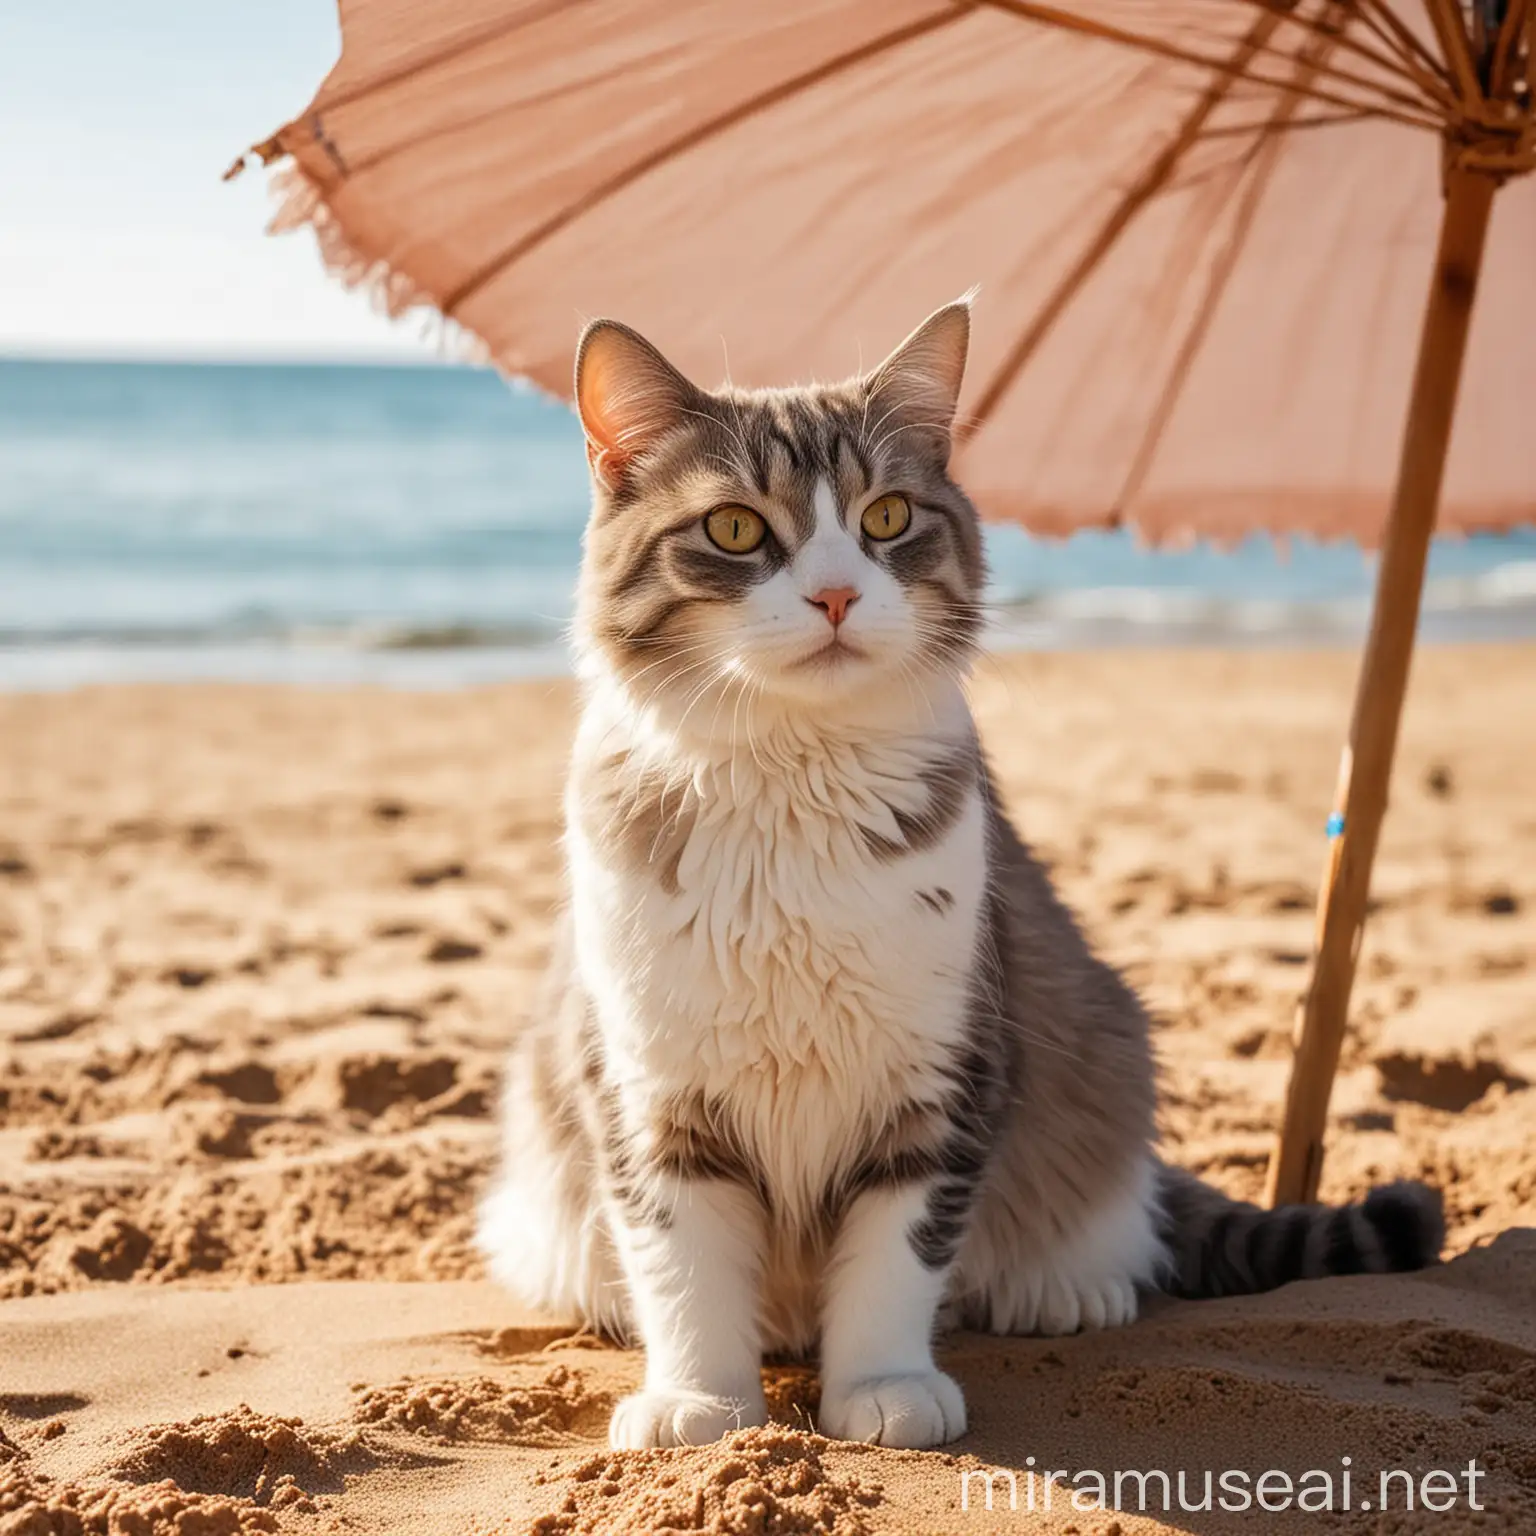 Beautiful Cat Relaxing on Sandy Beach Under Sun Umbrella